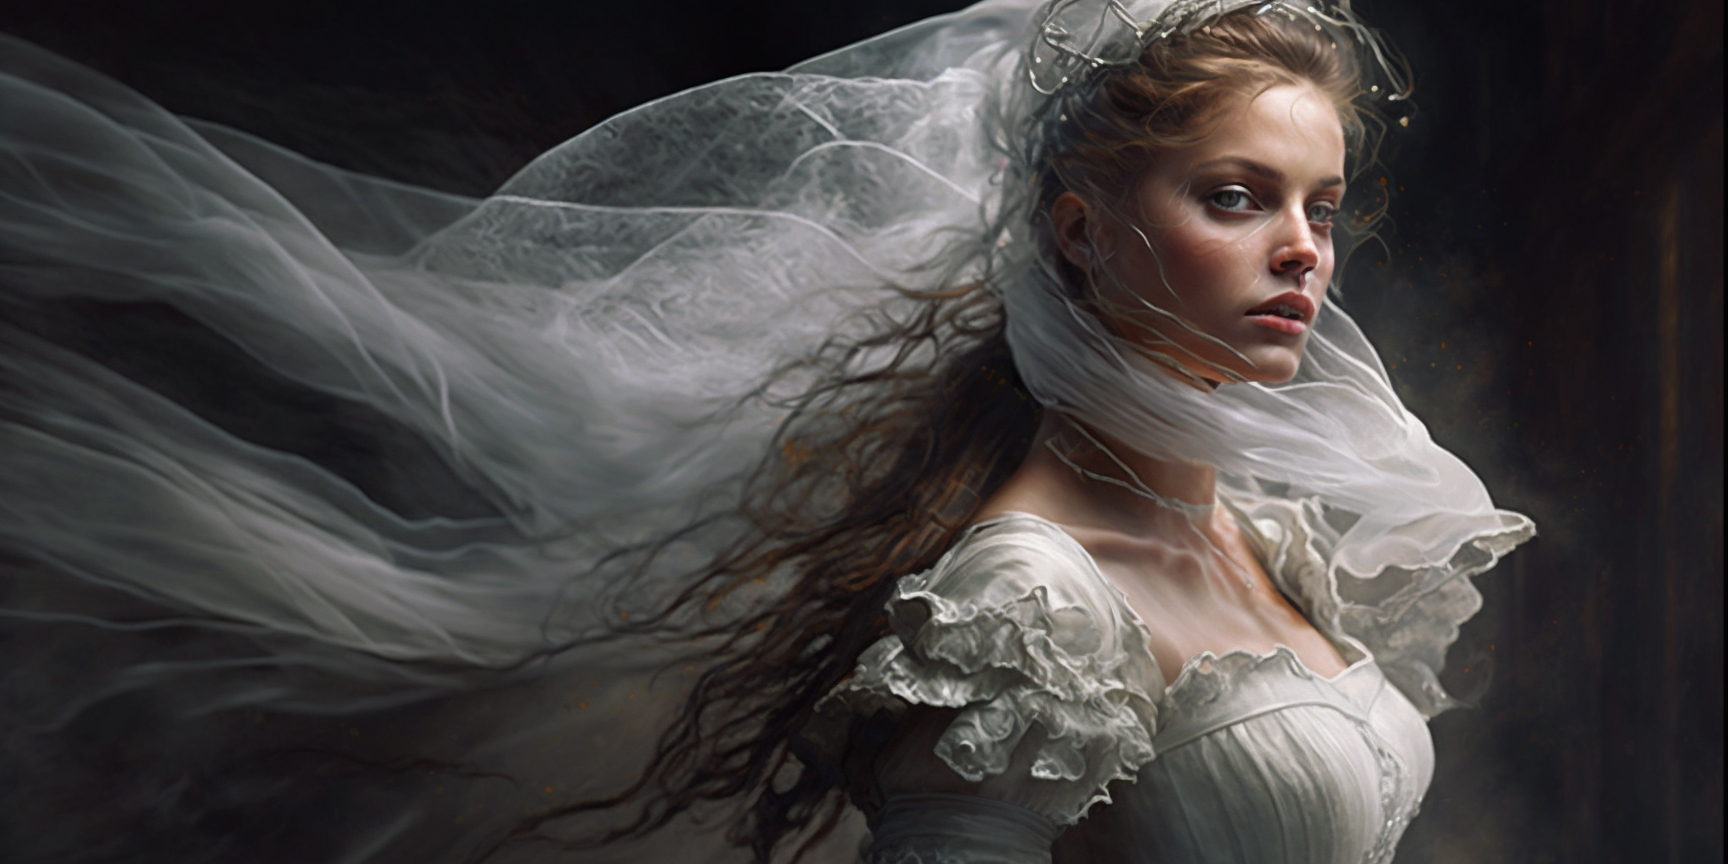 bride from ukraine